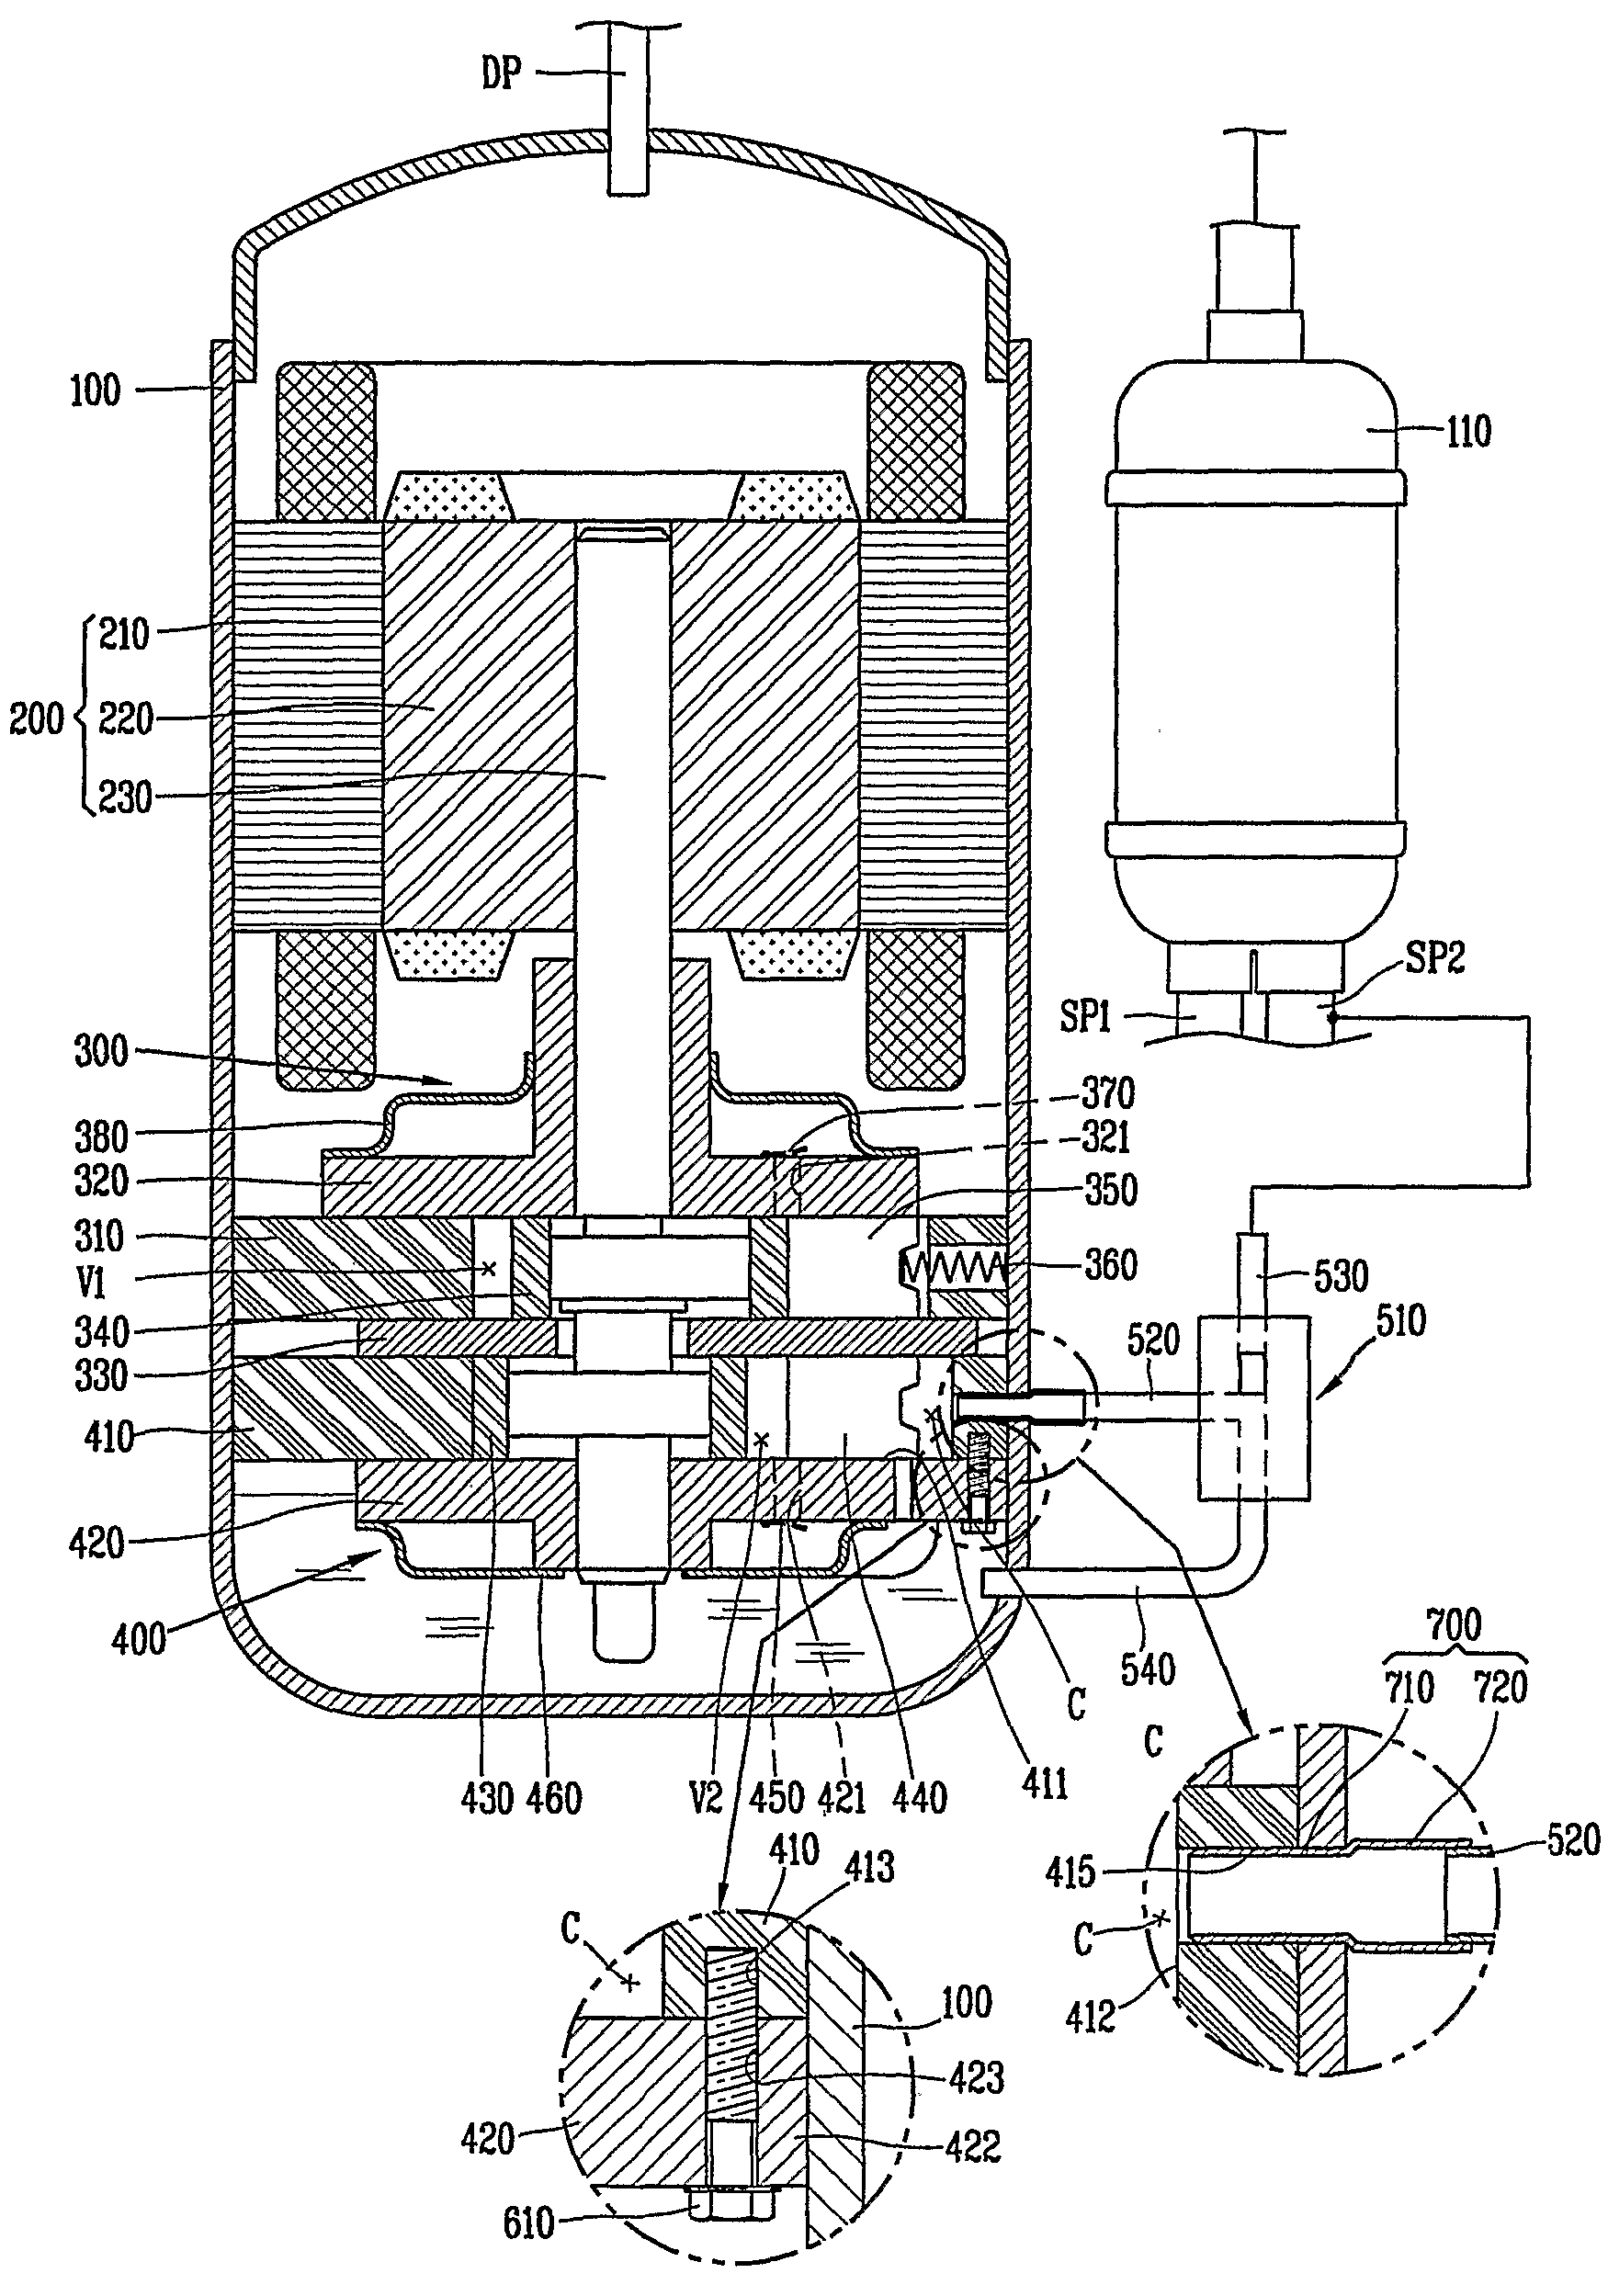 Capacity varying type rotary compressor